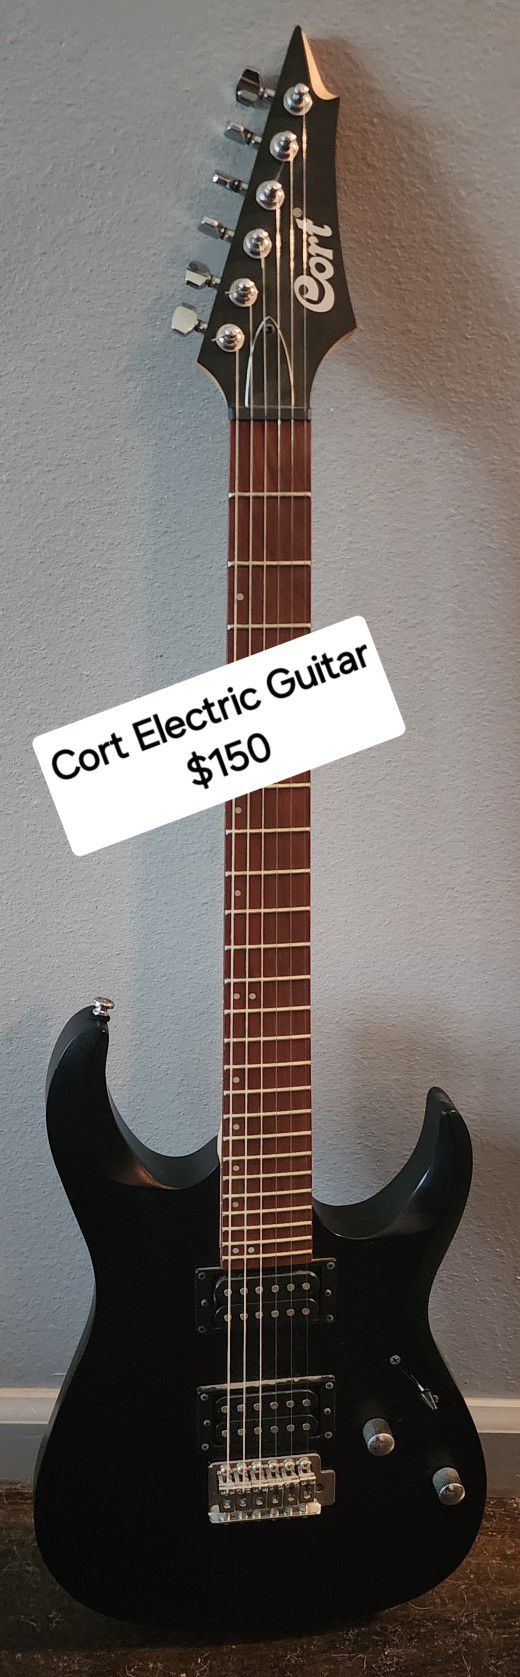 Cort Electric Guitar